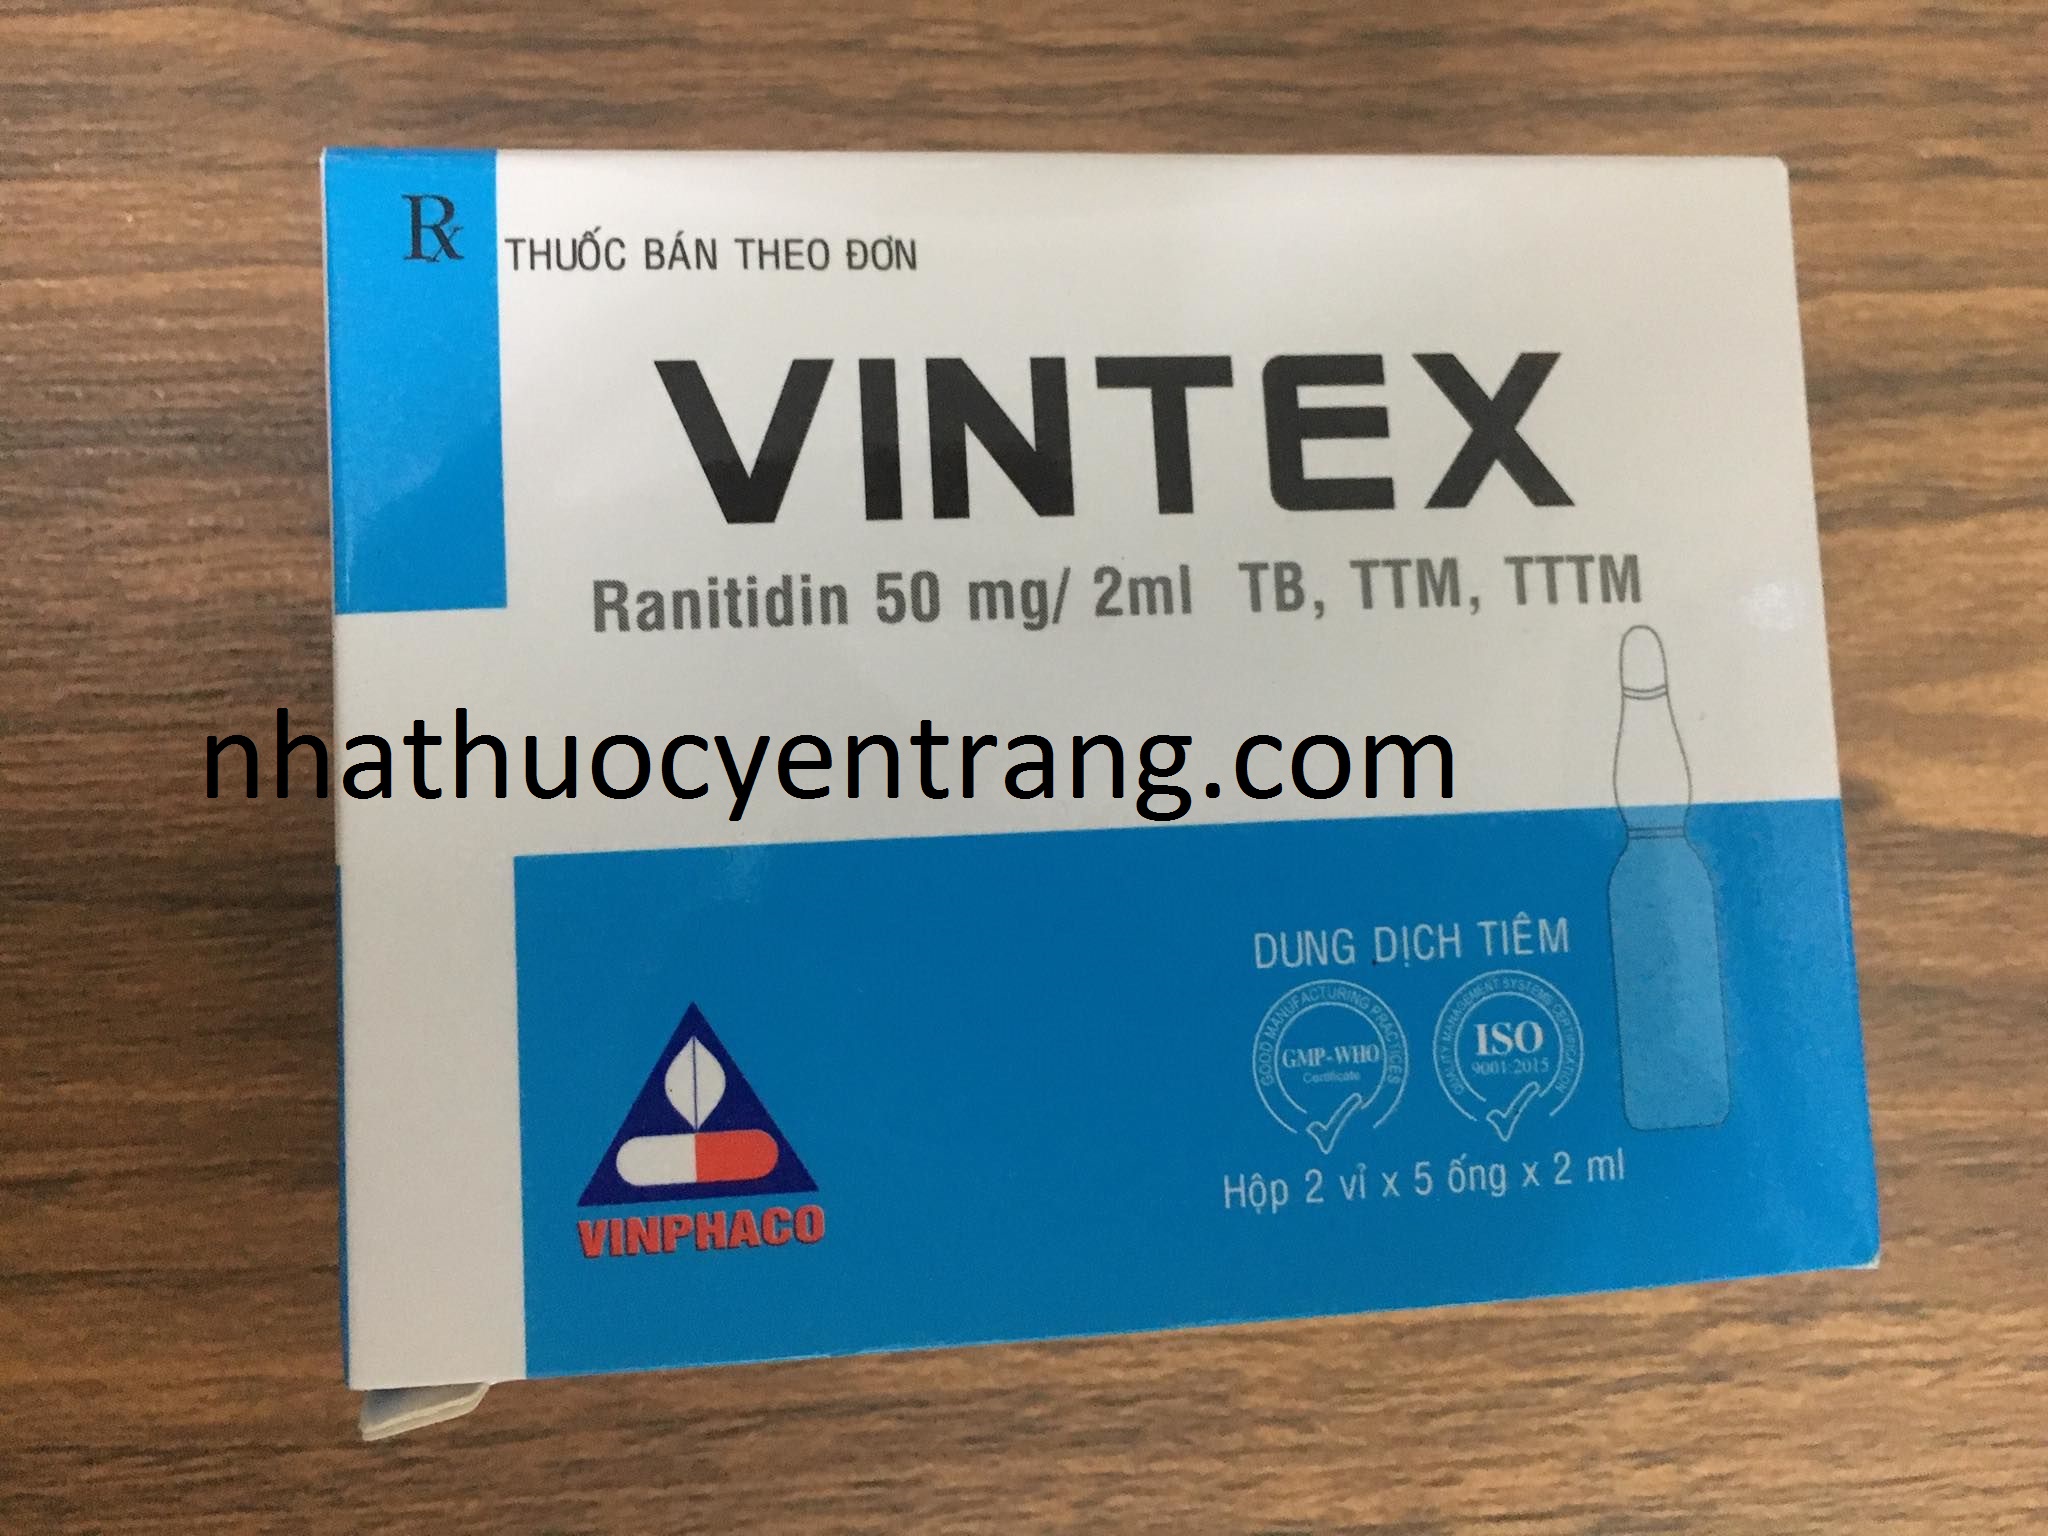 Vintex Injection